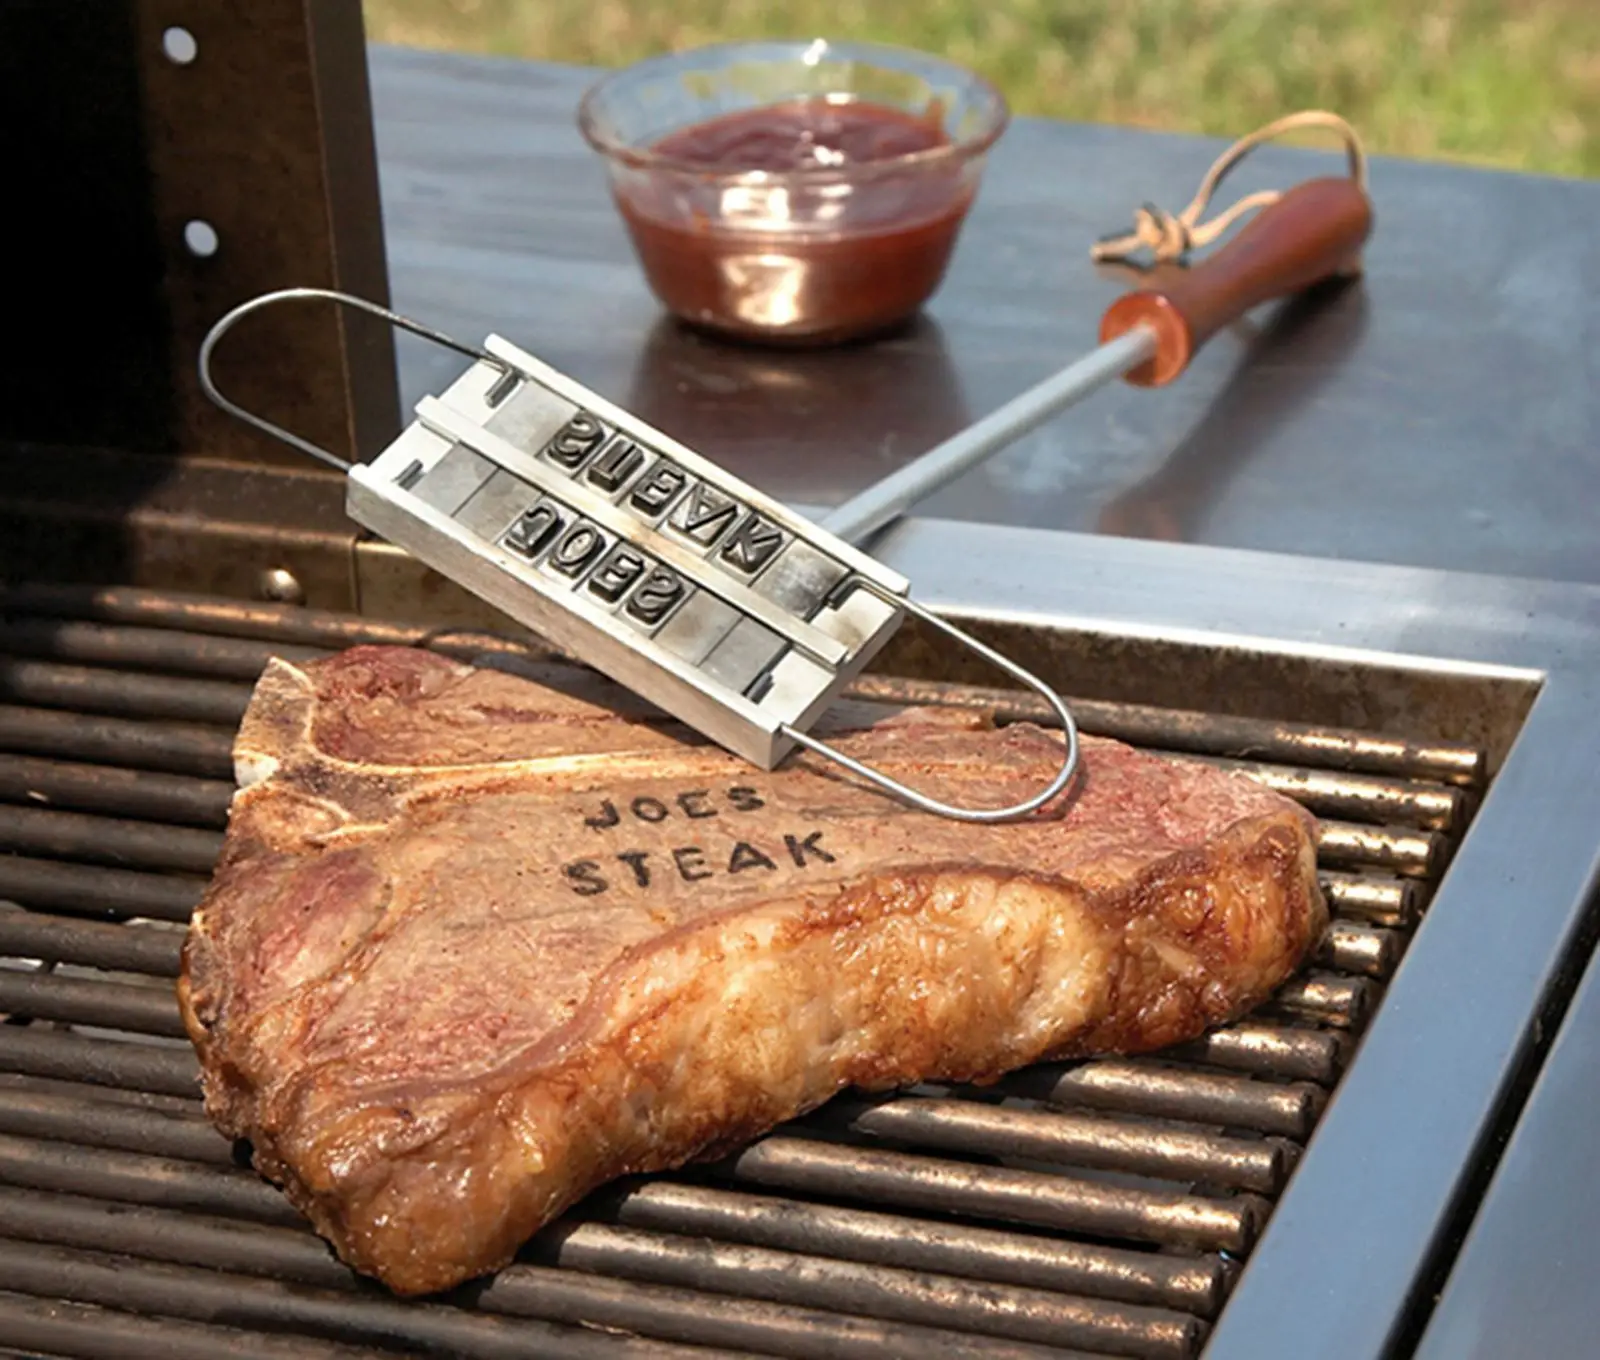 Customizable-BBQ-Steak-Iron-Name-Branding-Marking-Stamp-Barbecue-Branding-Tool-veasoon